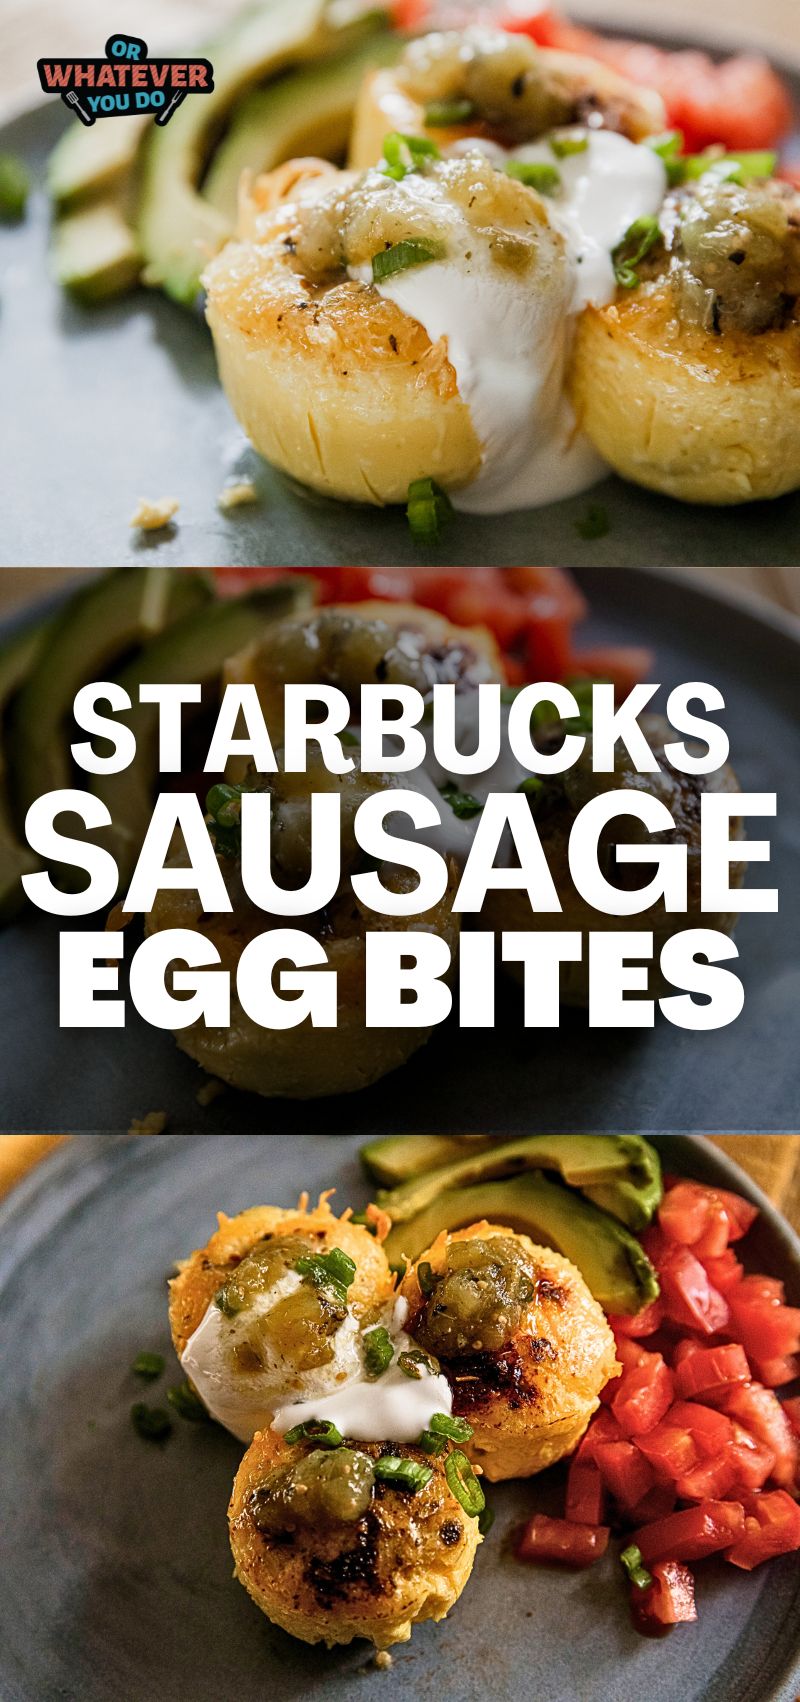 Starbucks Egg Bites with Sausage